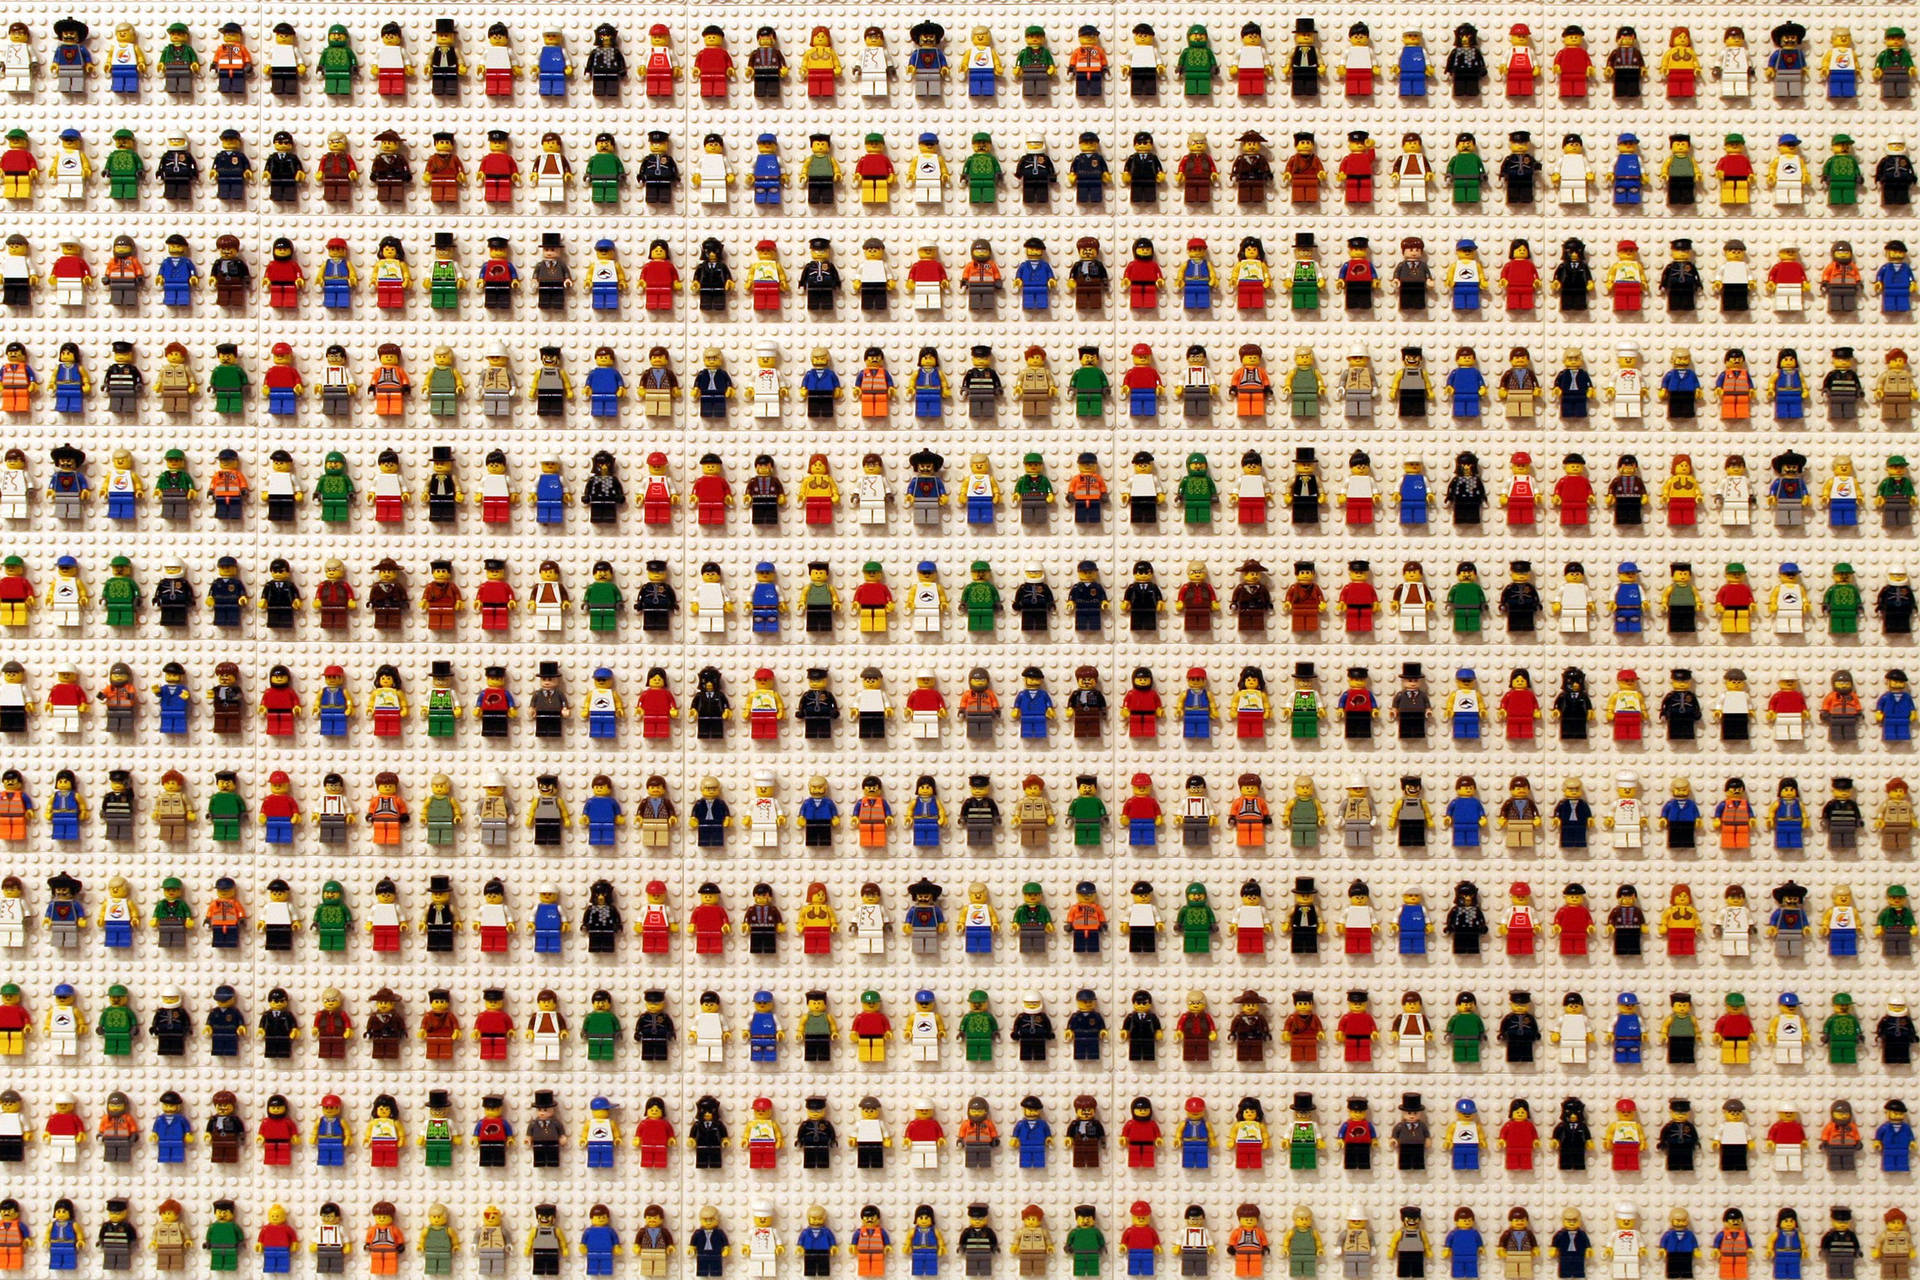 Lego Mini-figures Collection